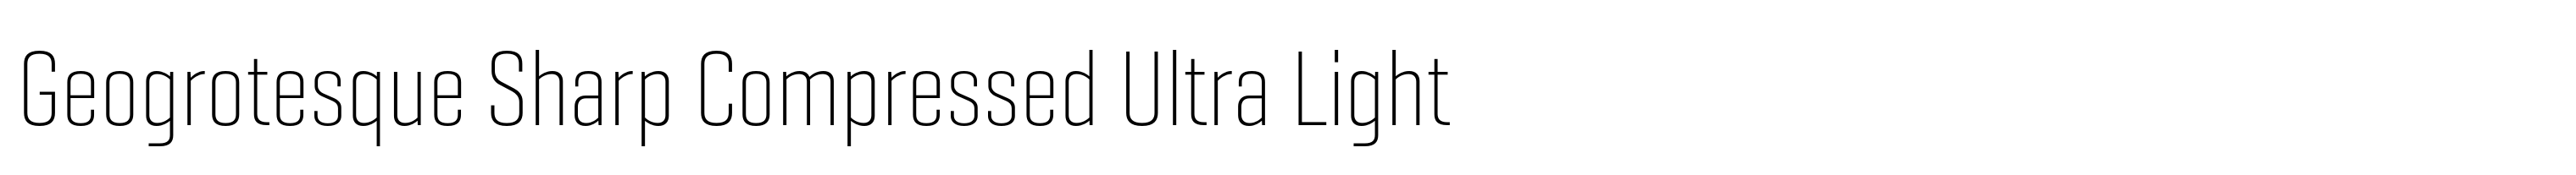 Geogrotesque Sharp Compressed Ultra Light